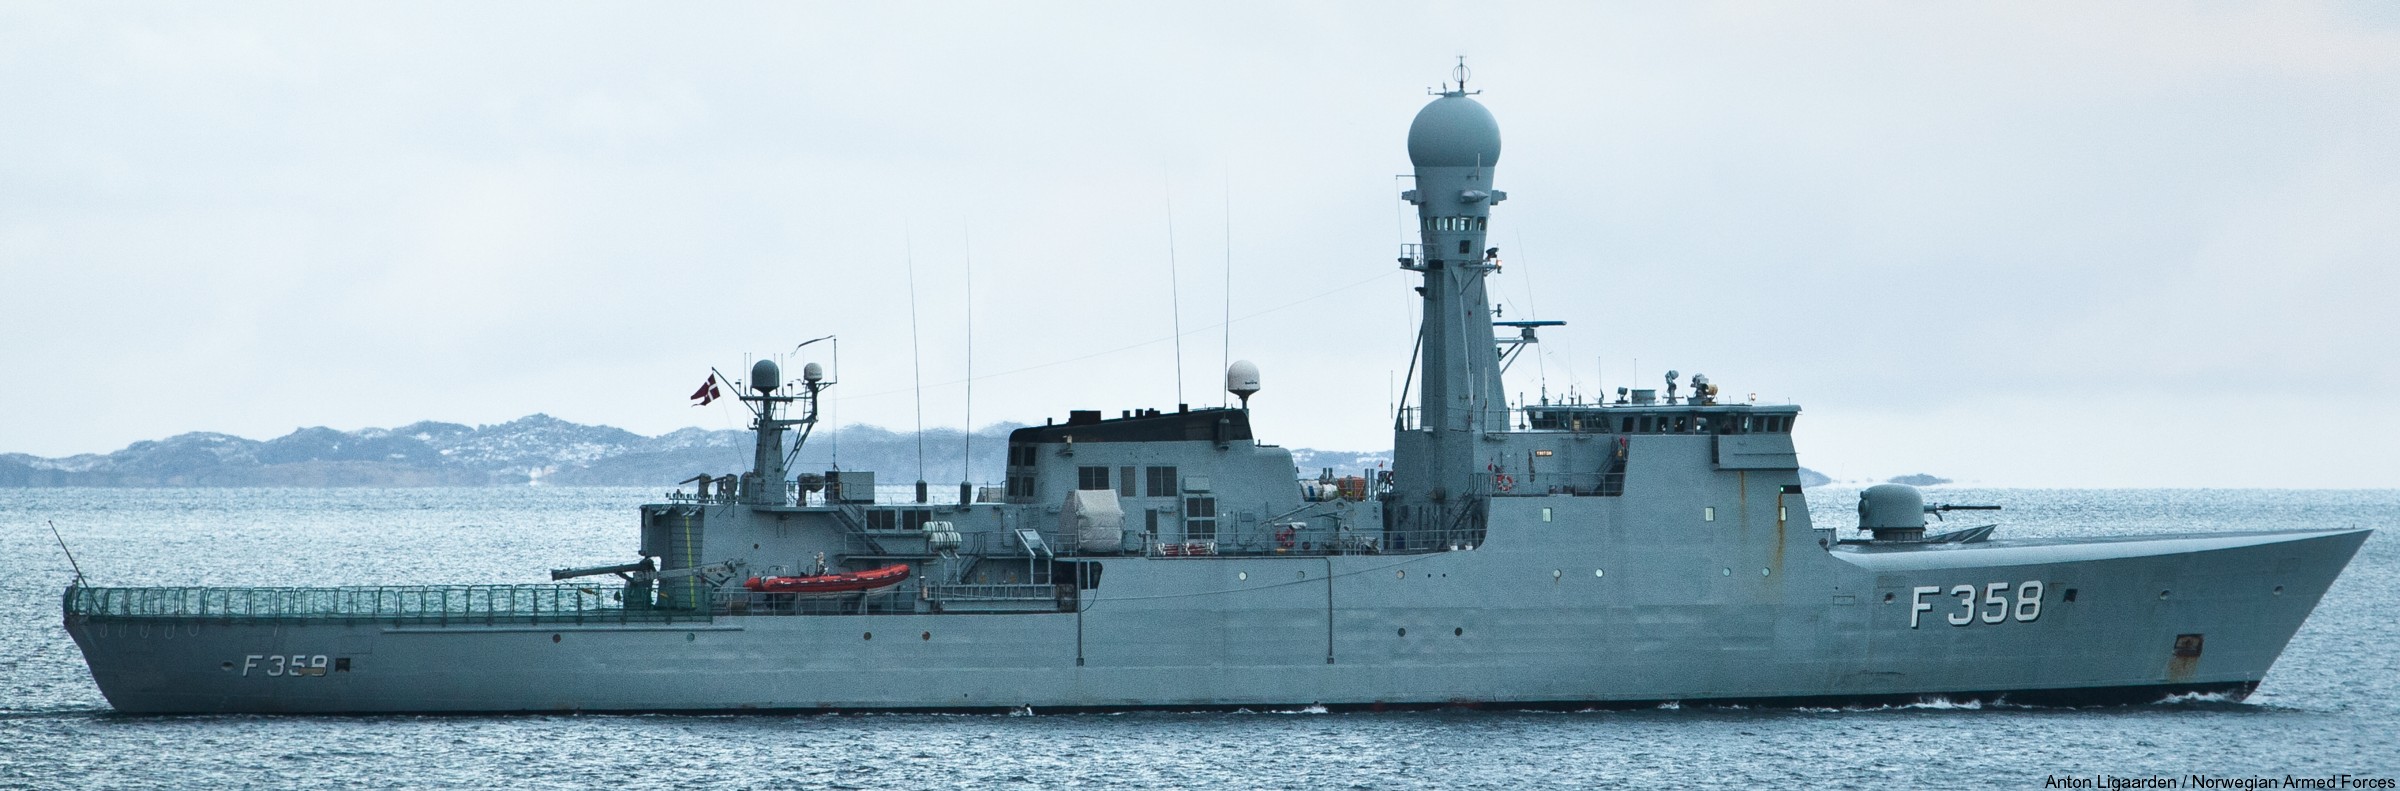 f-358 hdms triton thetis class ocean patrol frigate royal danish navy kongelige danske marine kdm inspektionsskibet 22